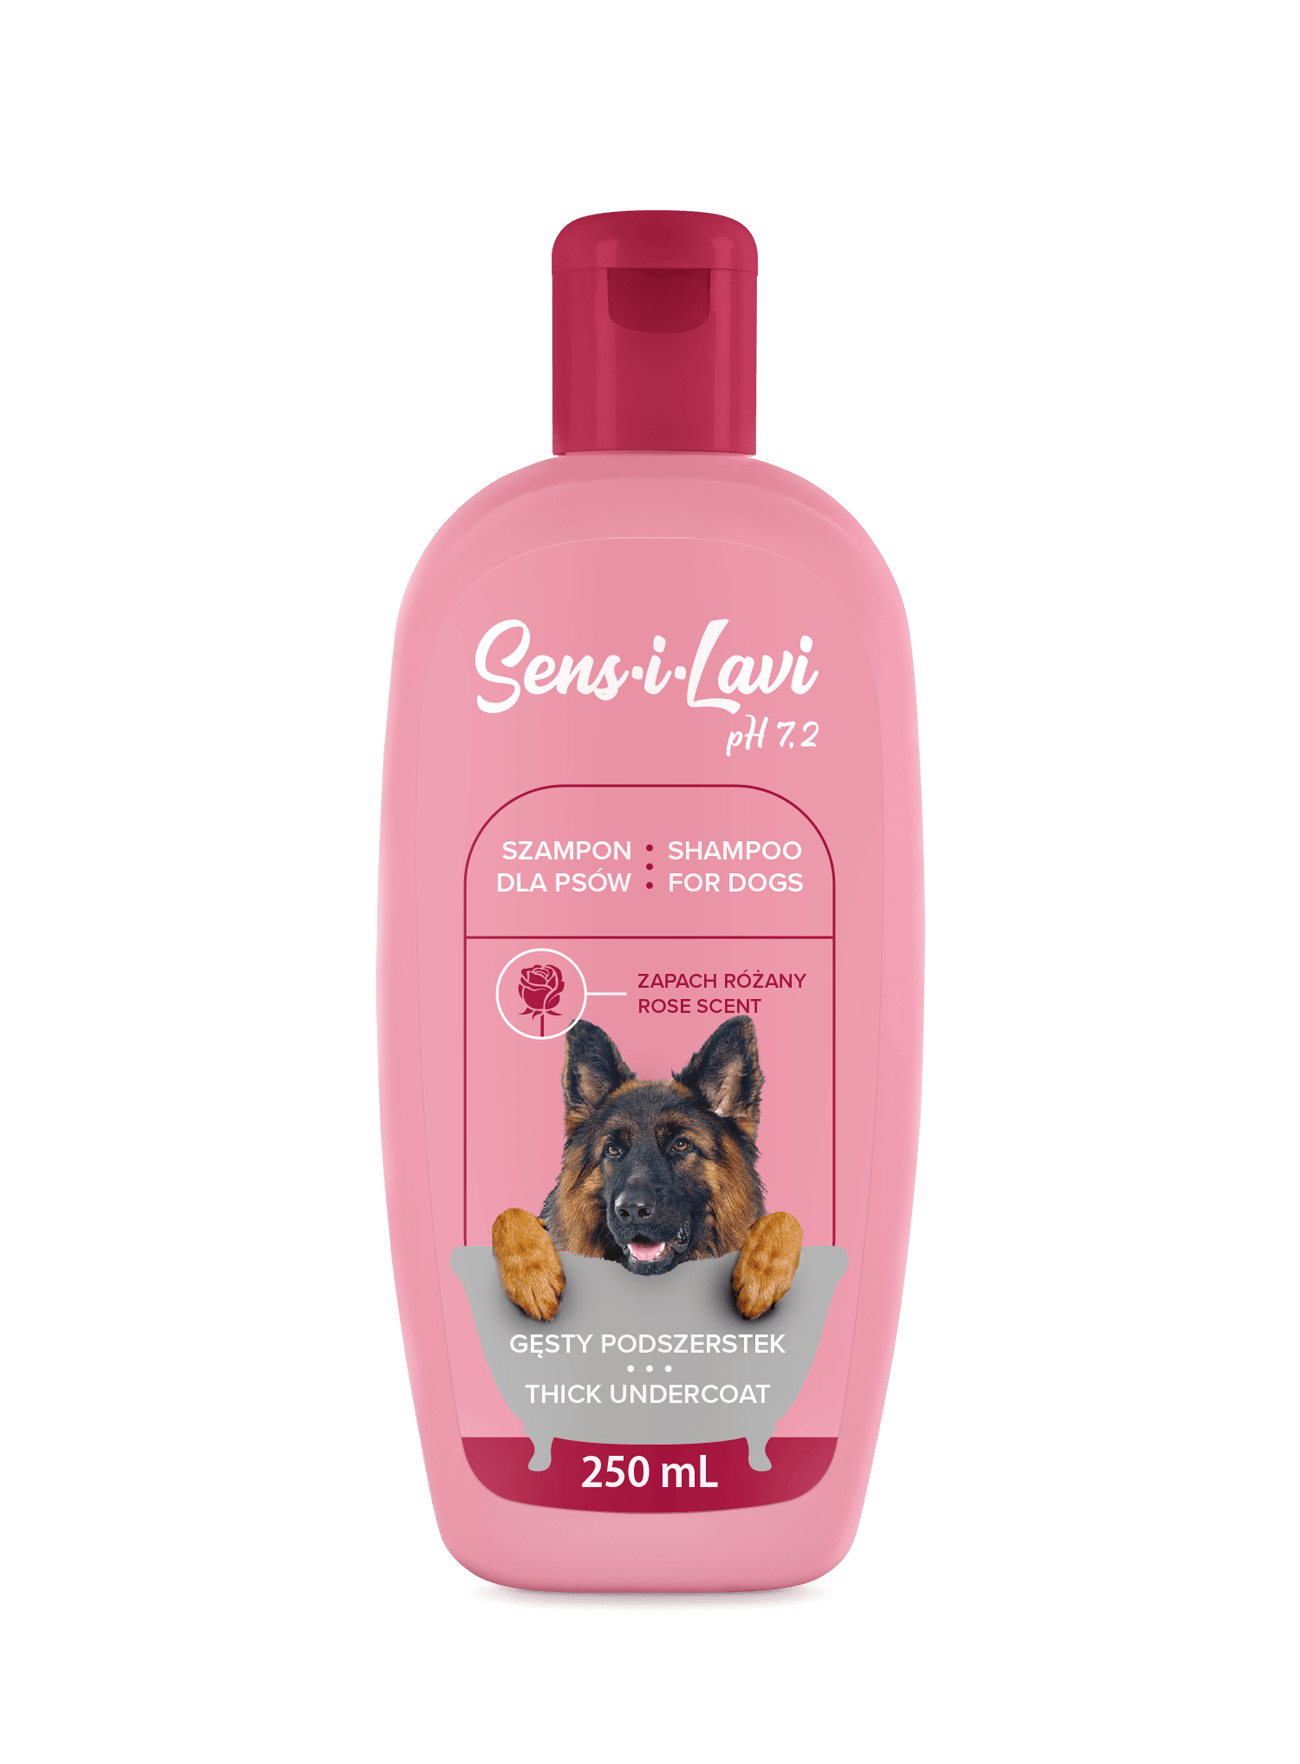 szampon dla psa sensi